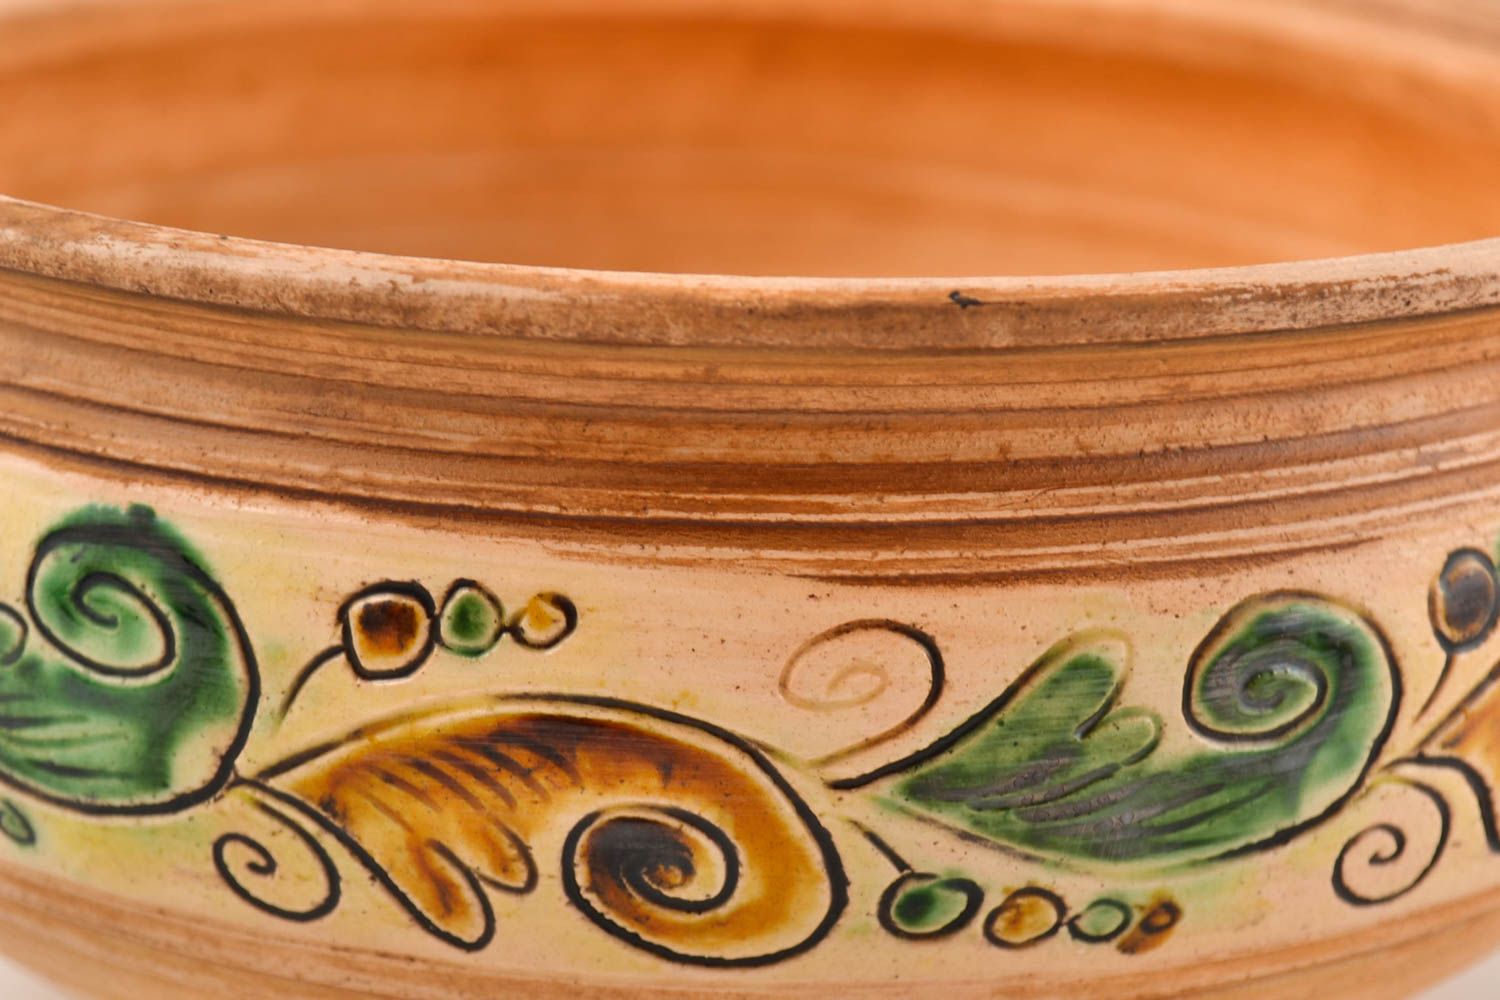 Handmade bowl ceramic dishes unusual bowl for kitchen decor kitchen utensils photo 2